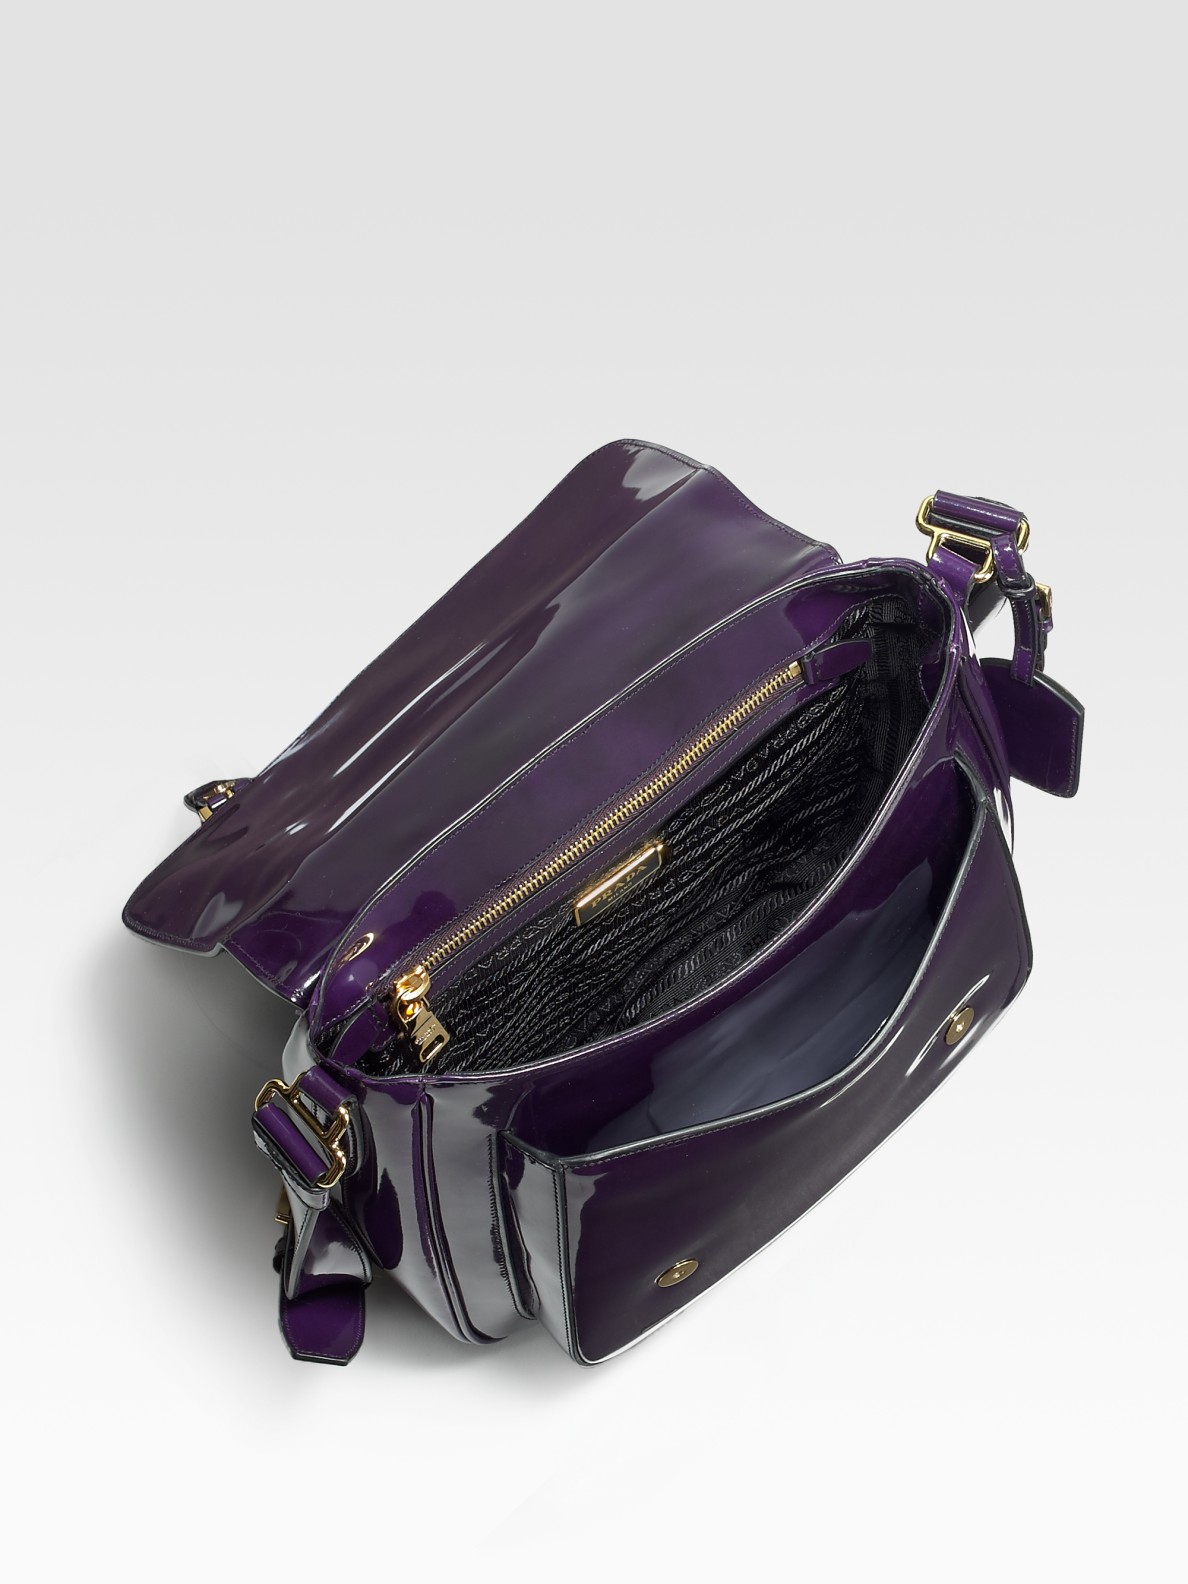 Lyst - Prada Spazzolato Messenger Bag in Purple